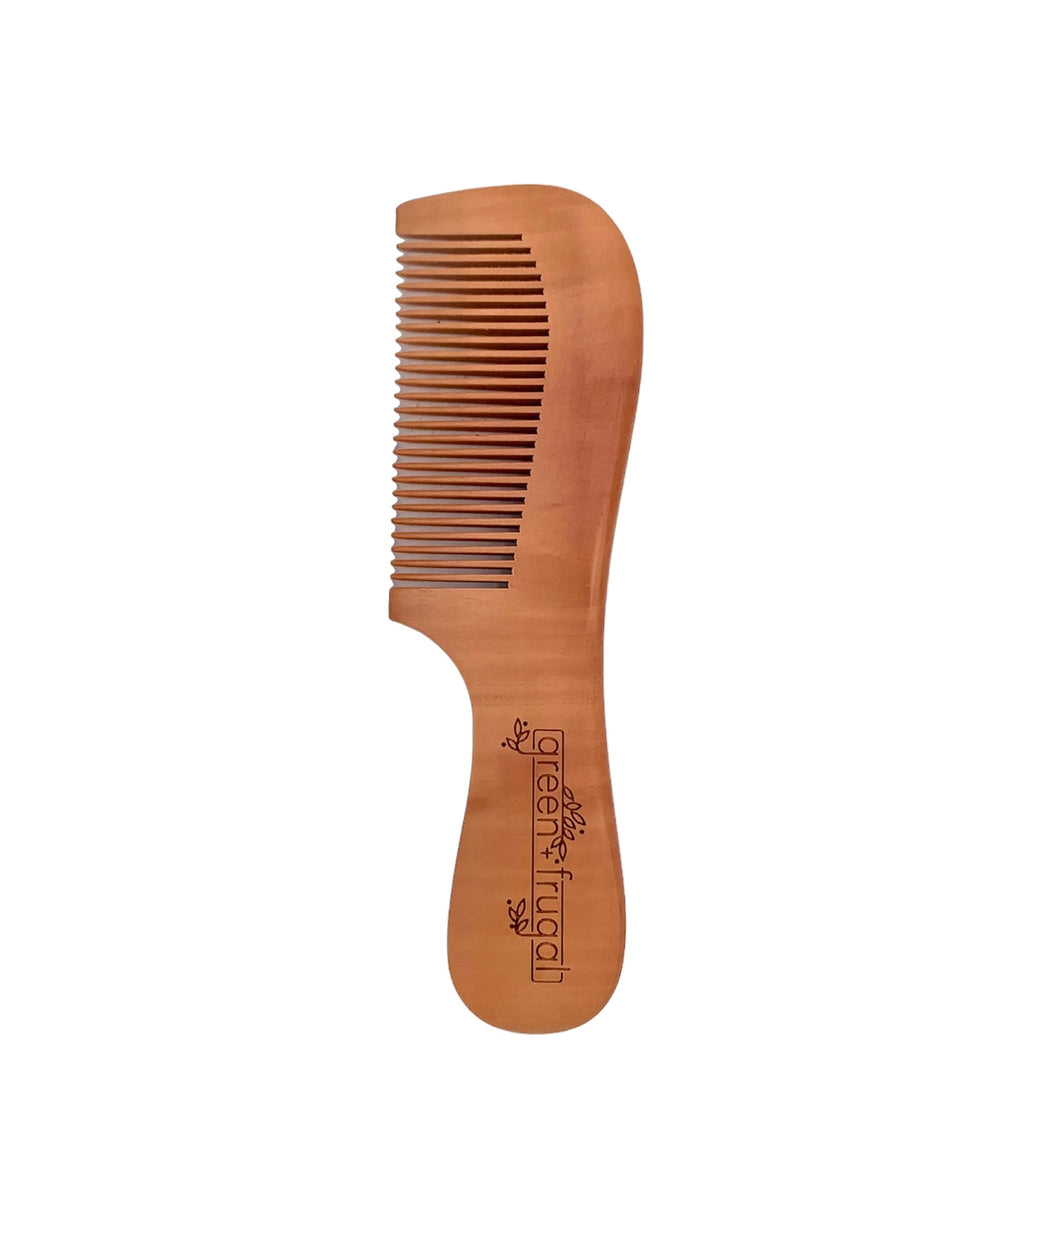 Rake comb